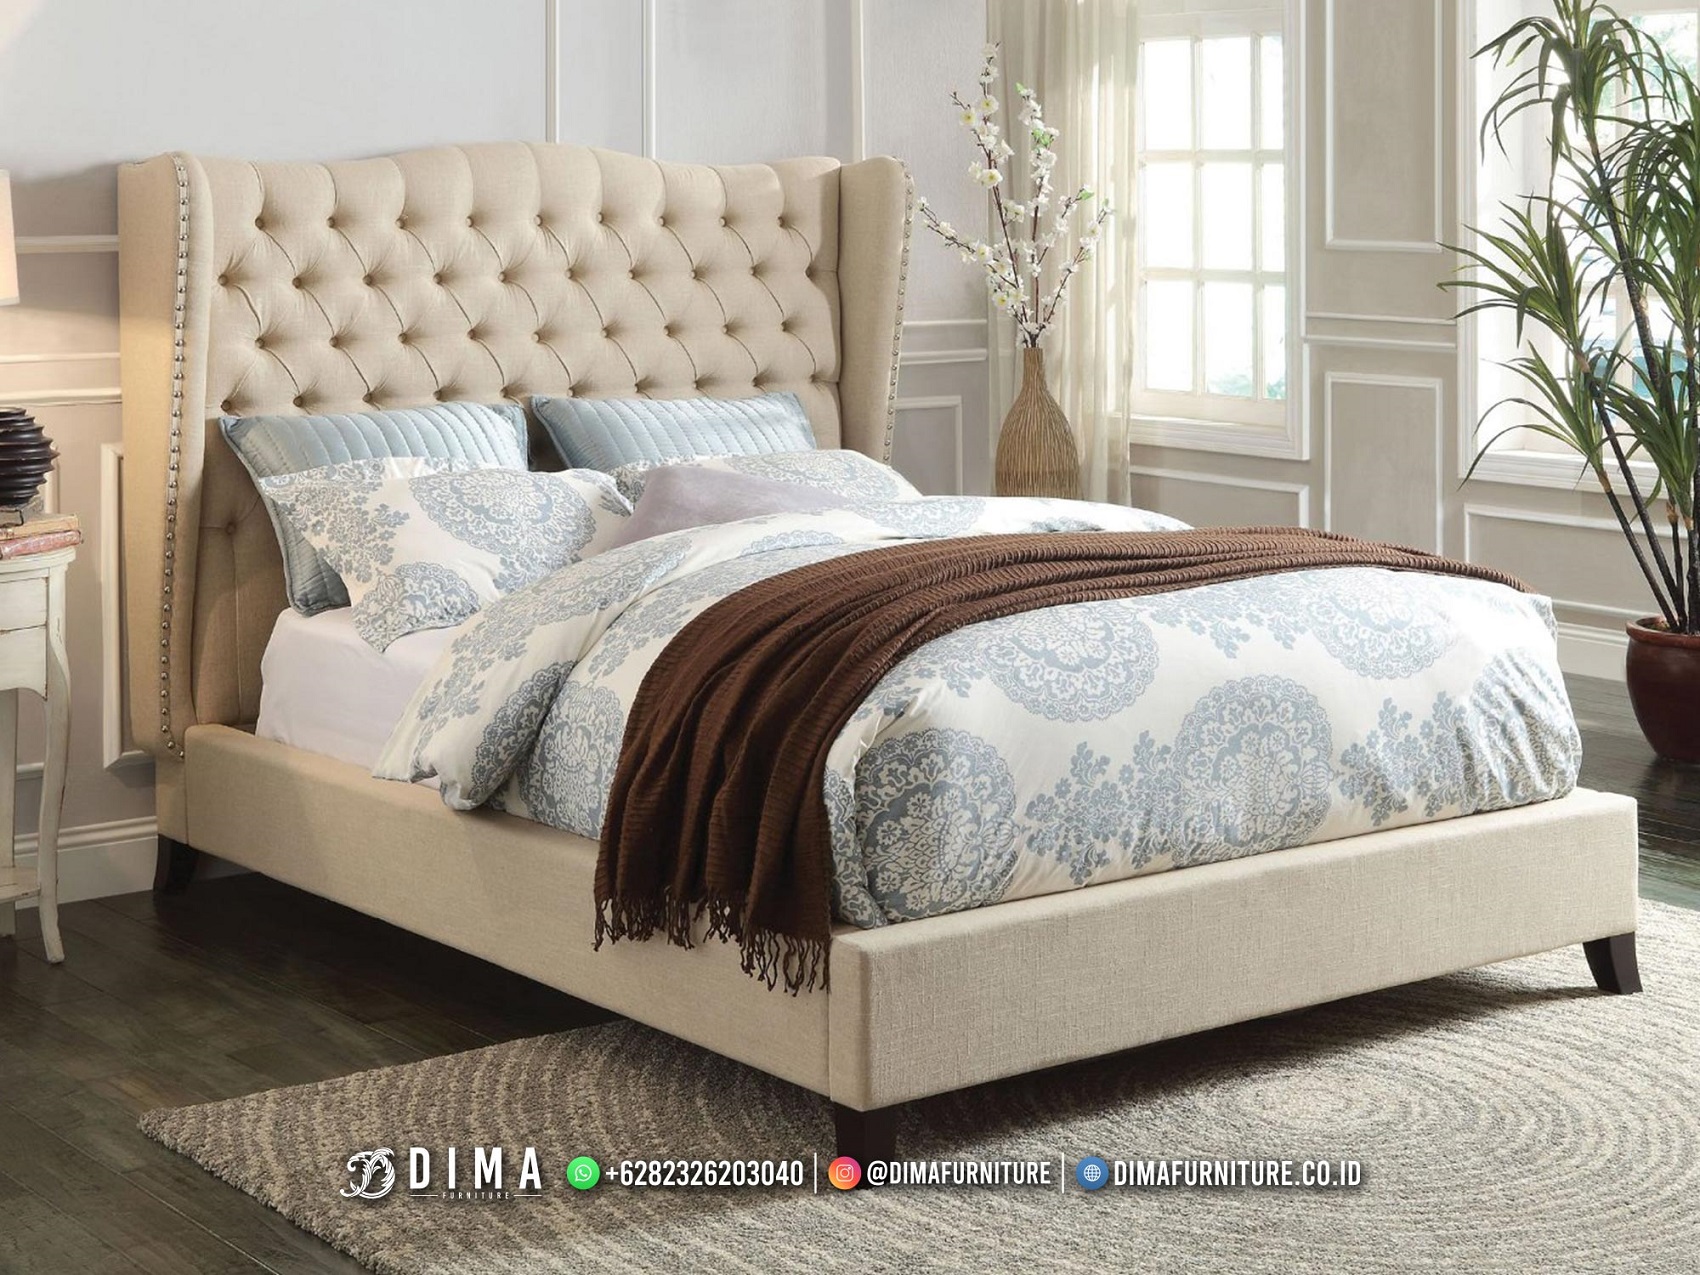 Kamar Set Minimalis Terbaru, Dipan Tidur Elegant Luxury DF-2749